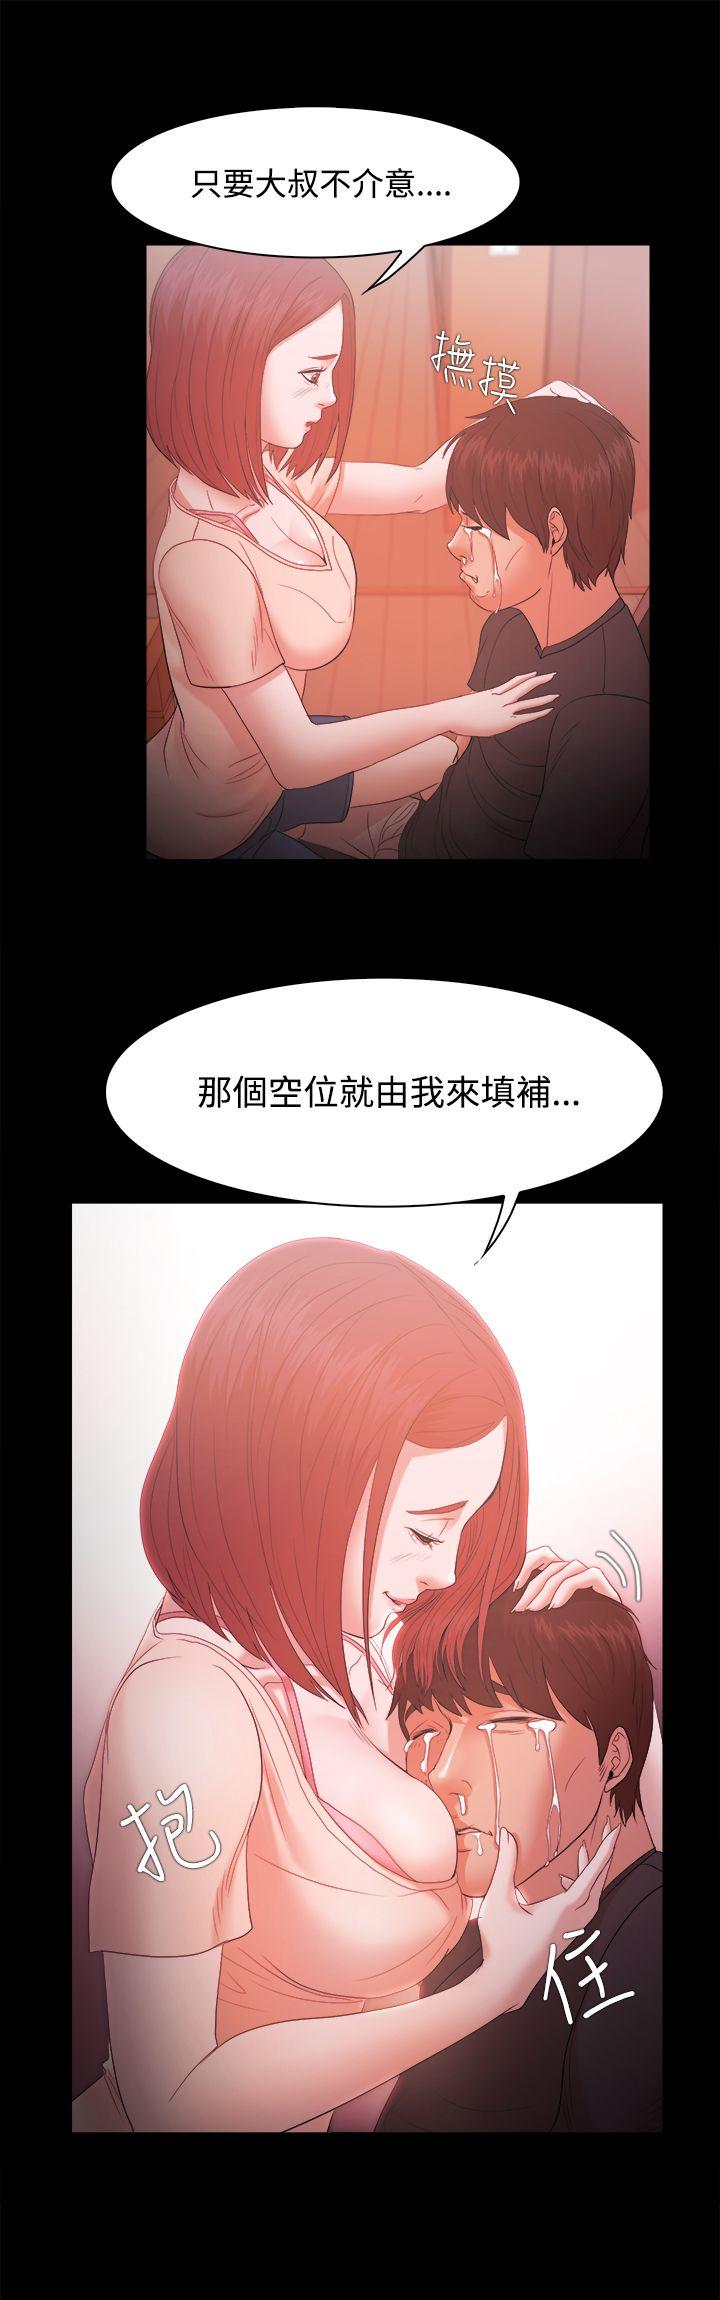 韩国污漫画 Loser 第18话 2